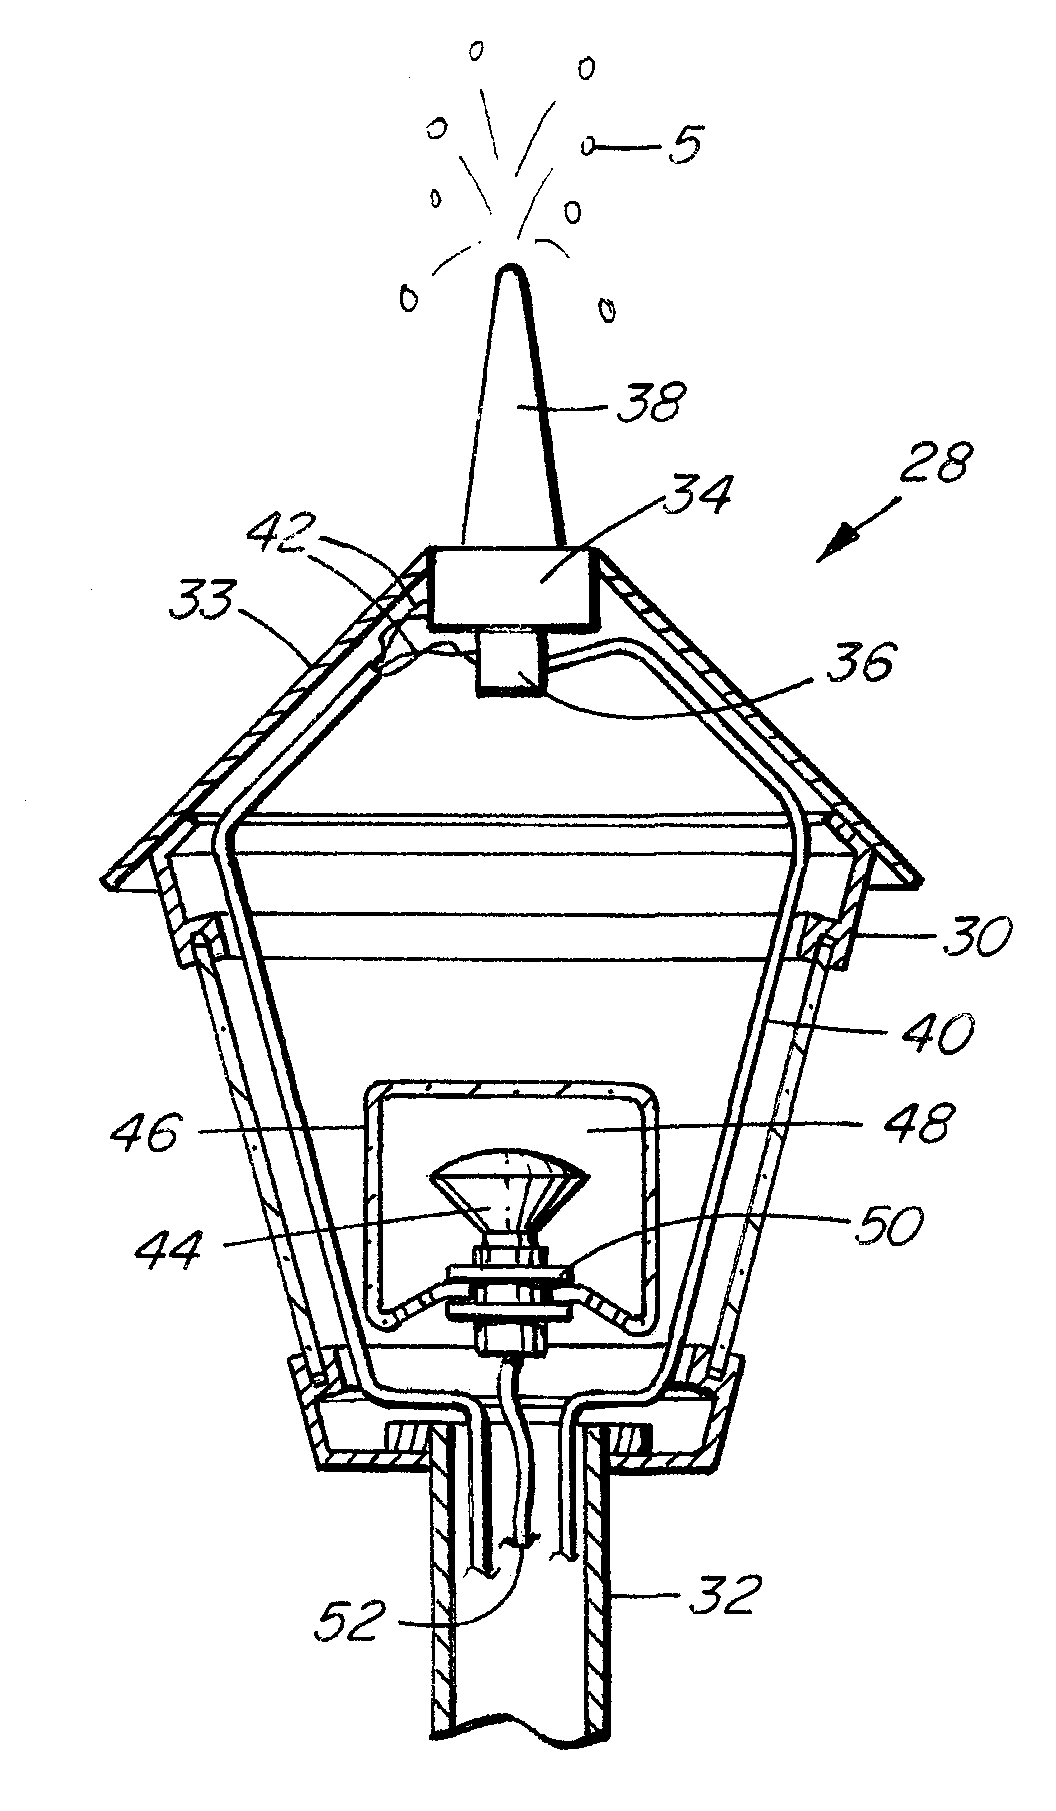 Illuminated artificial snowmaking method and apparatus